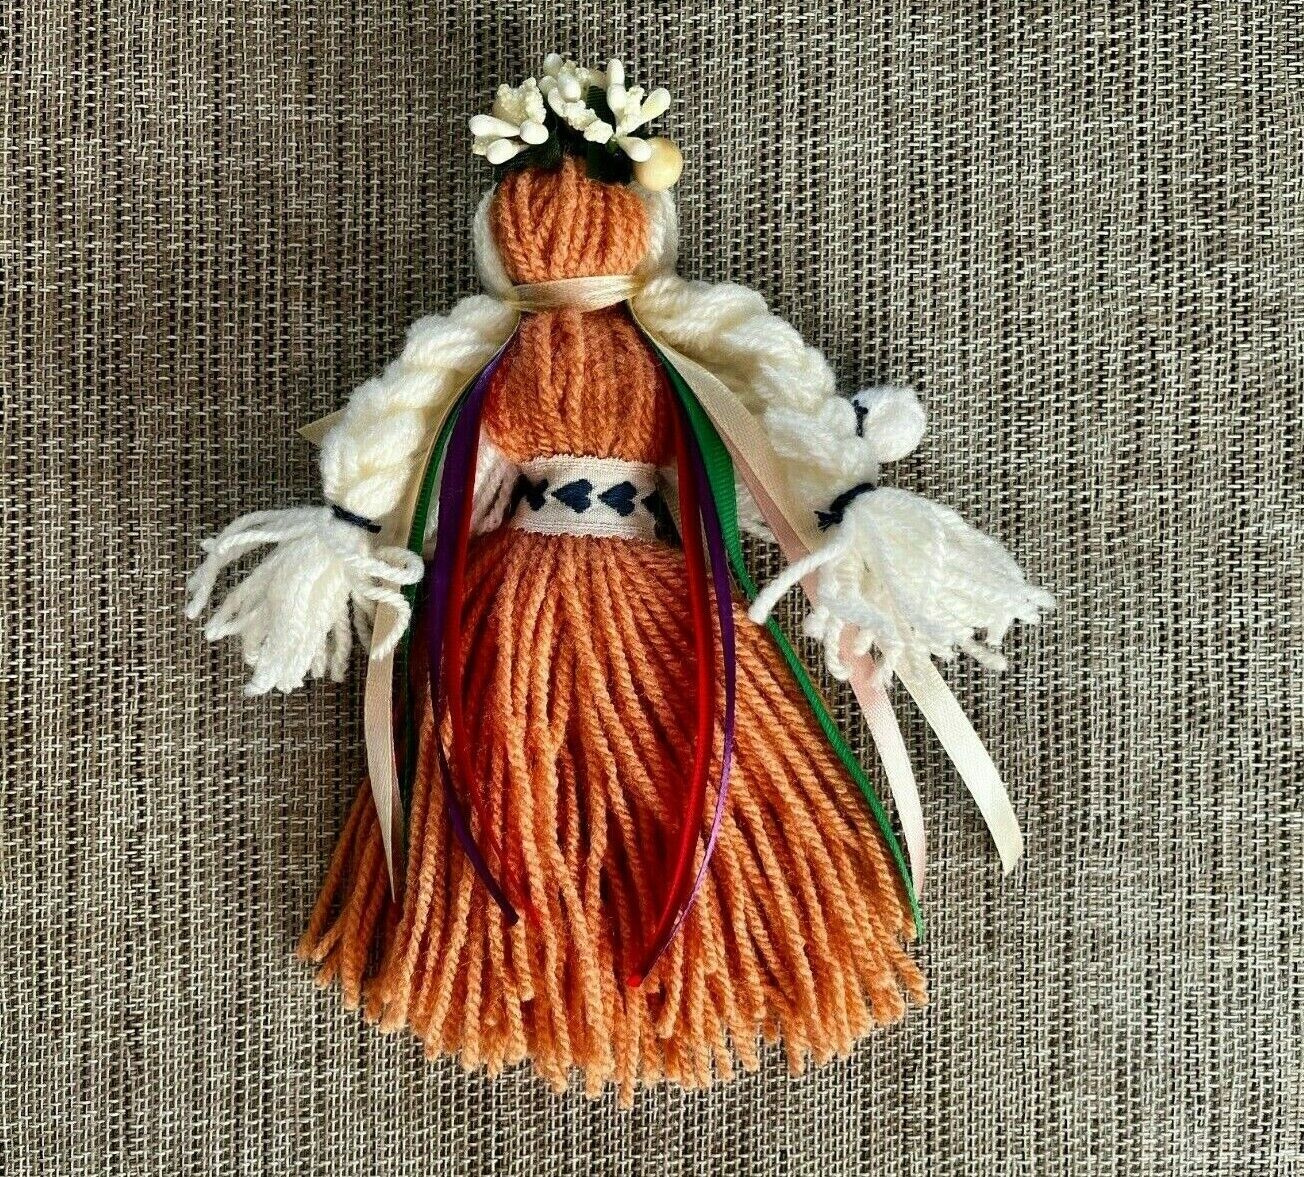 Motanka Ukraine doll. cloth dolls handmade. Traditional doll